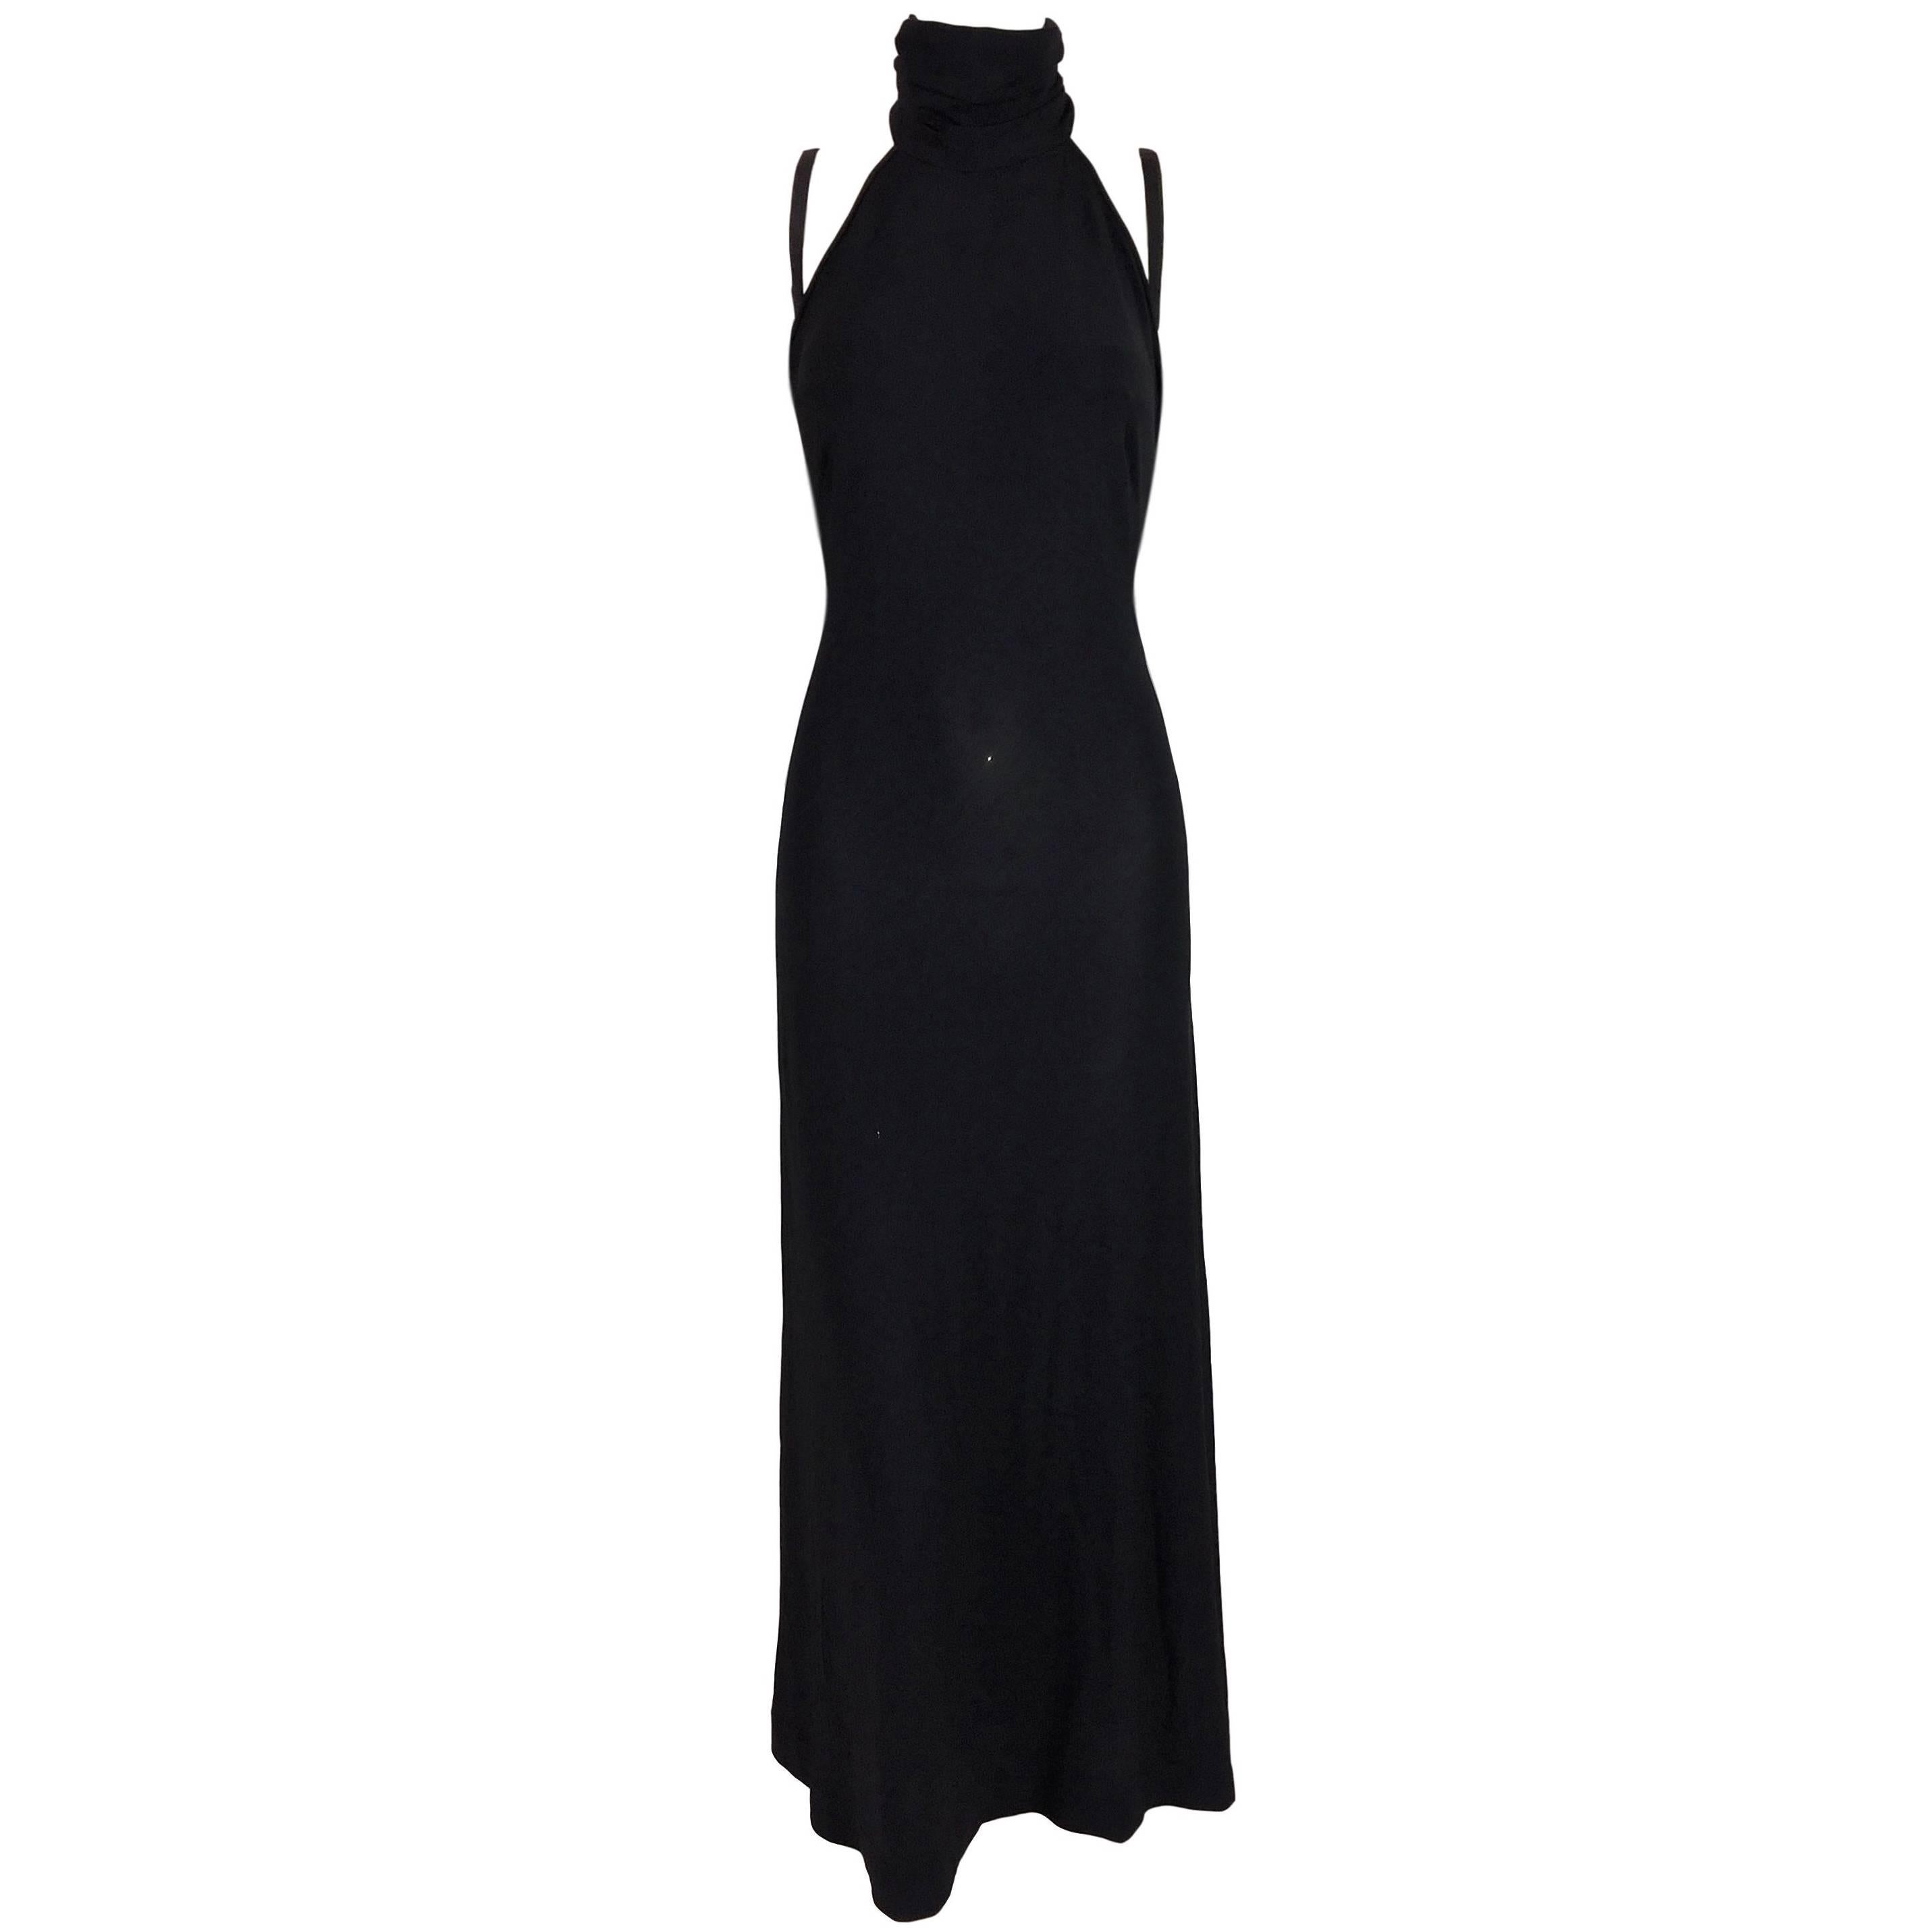 NWT S/S 1996 Dolce & Gabbana Black Semi-sheer Bra 1950's Style Dress